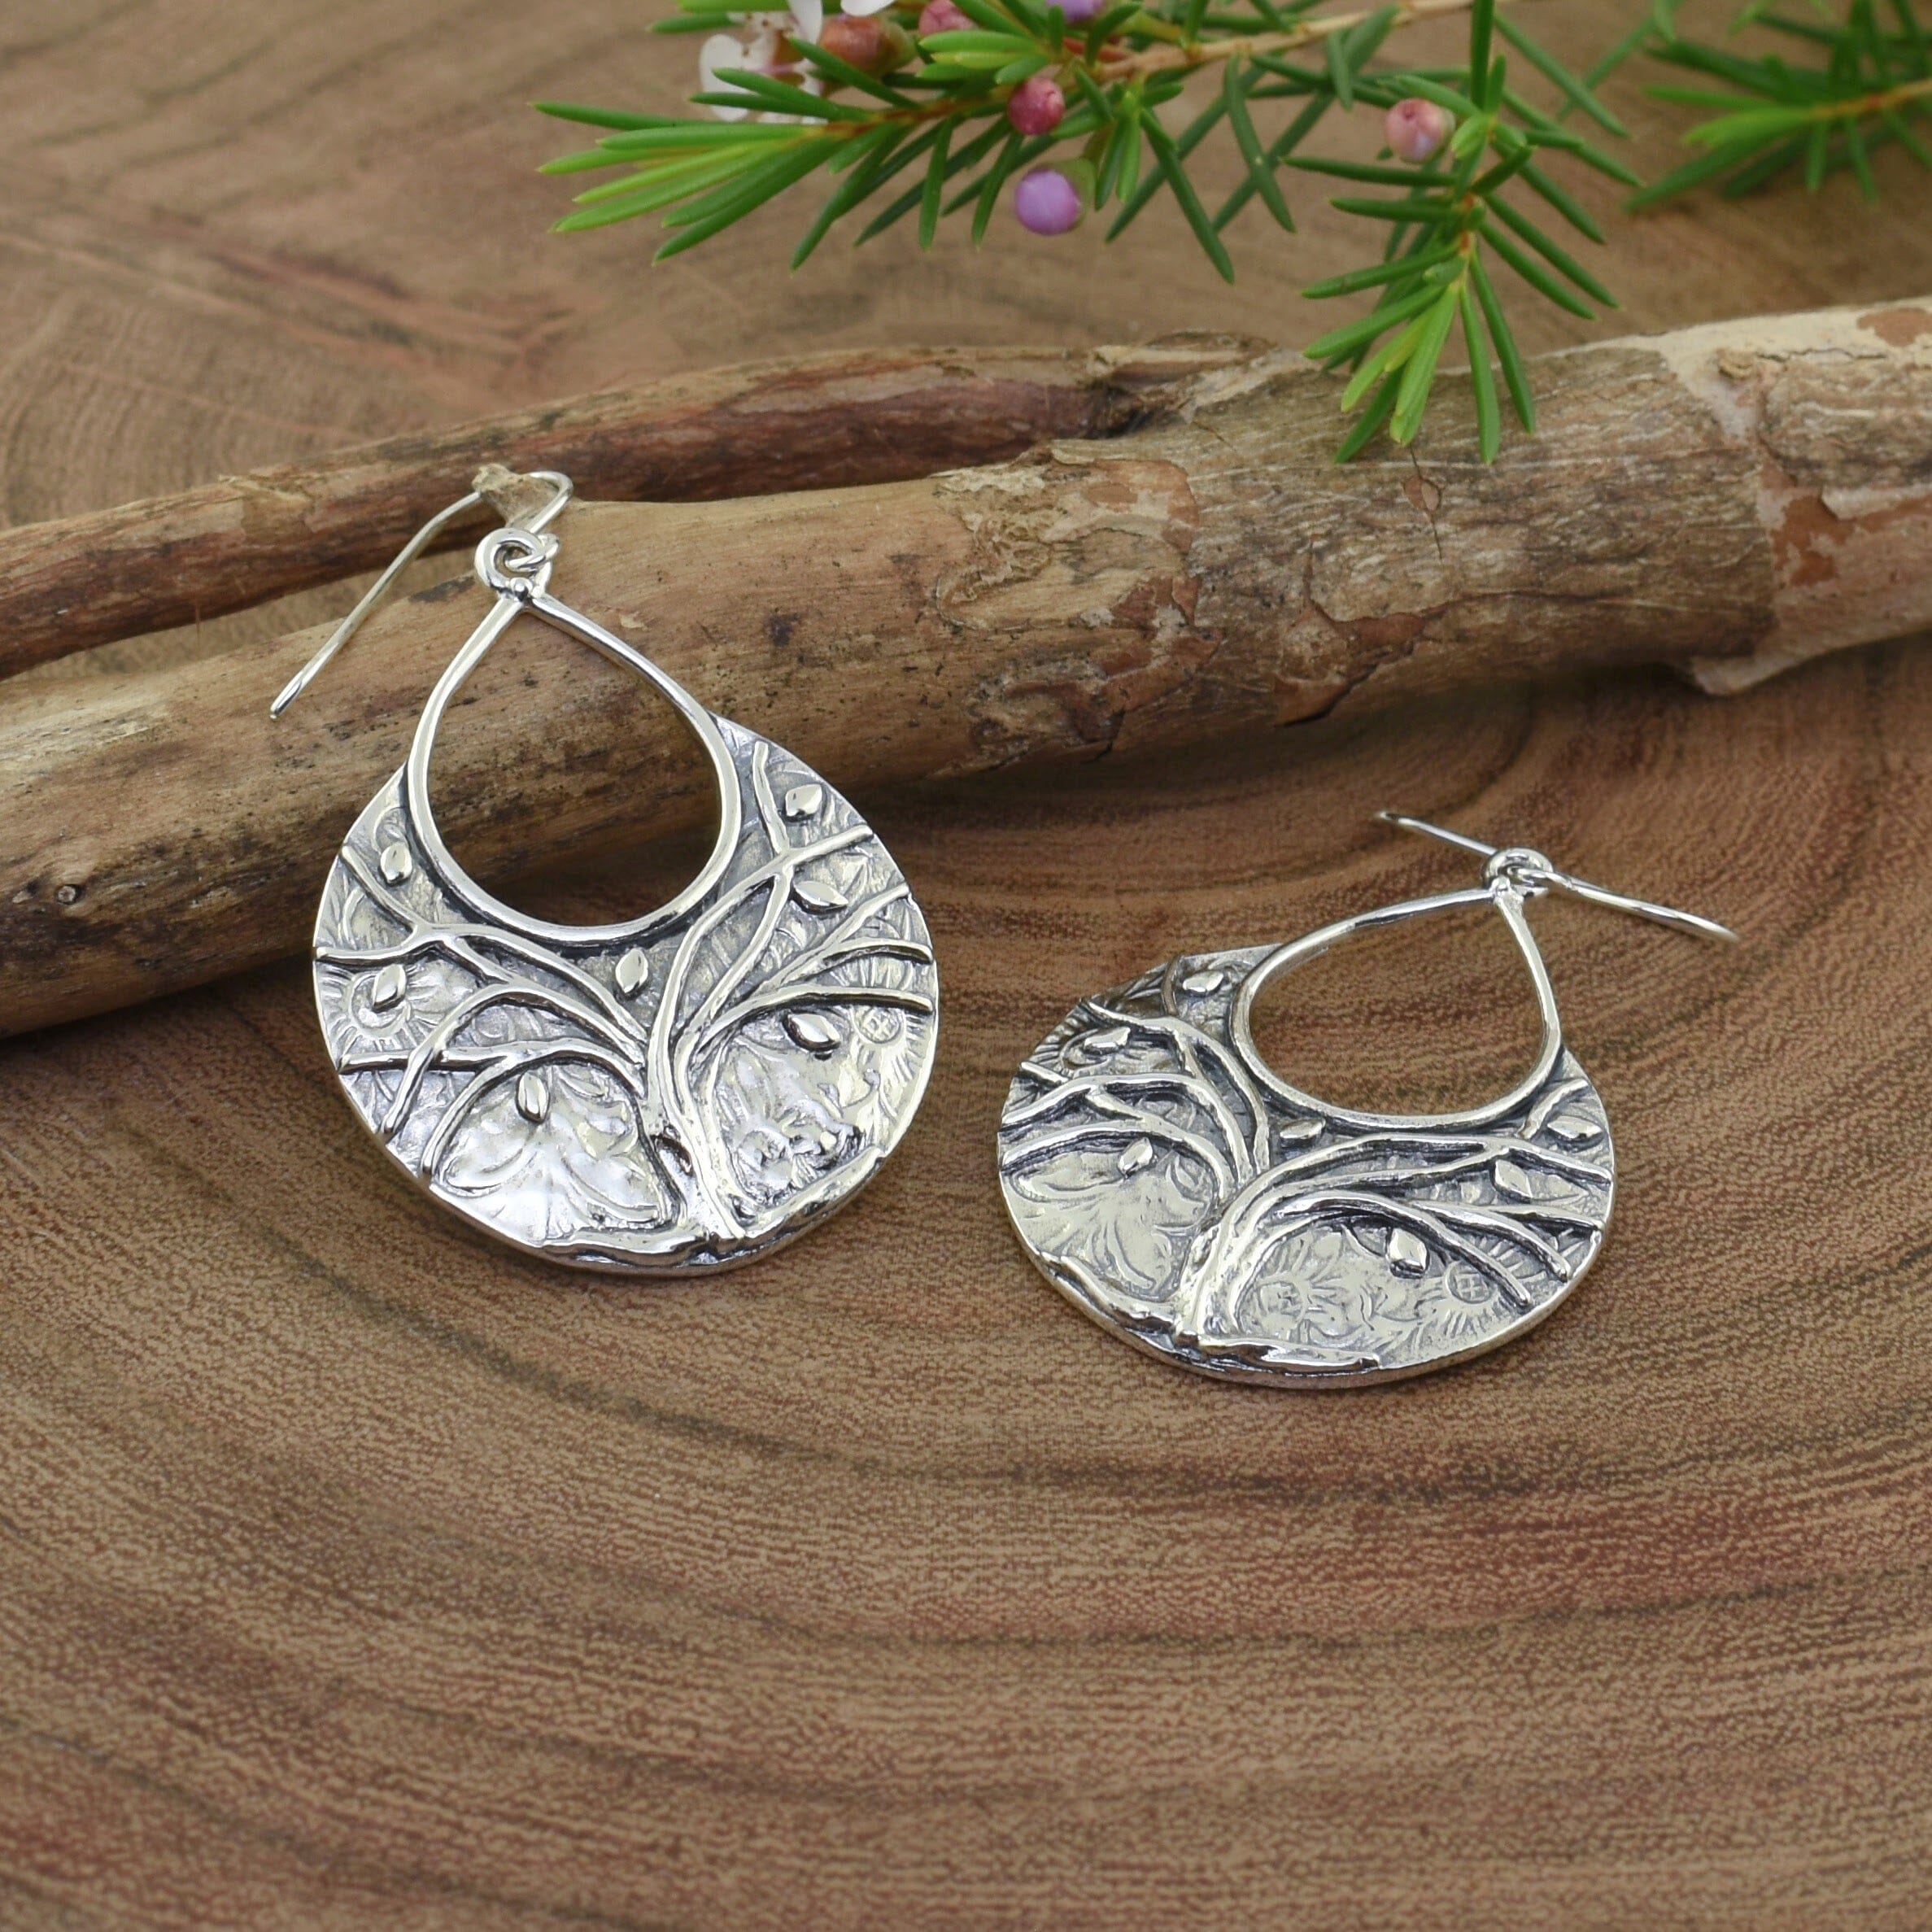 .925 sterling silver dangling earrings featuring a tree